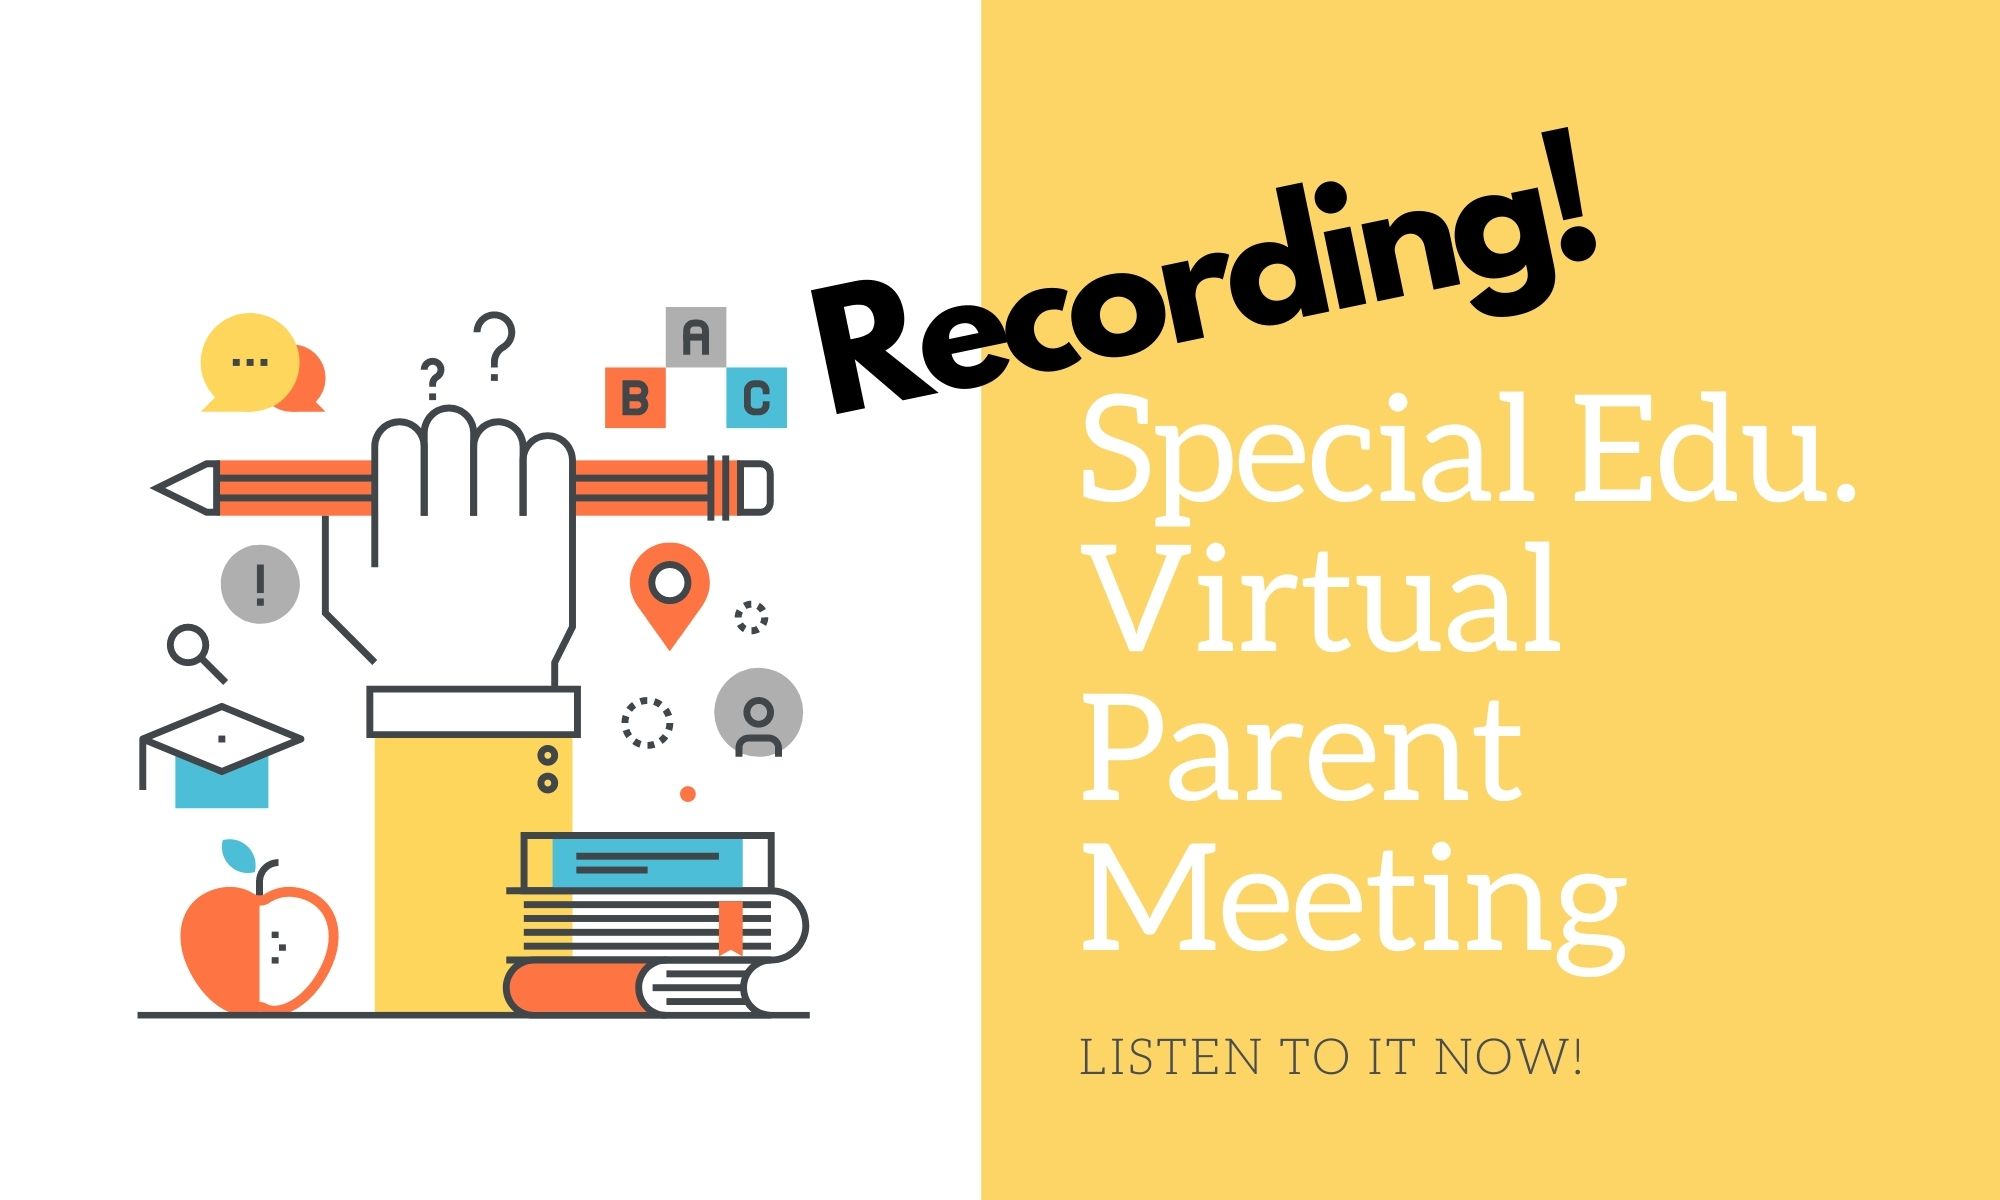 Special Education Virtual Parent Meeting Recording